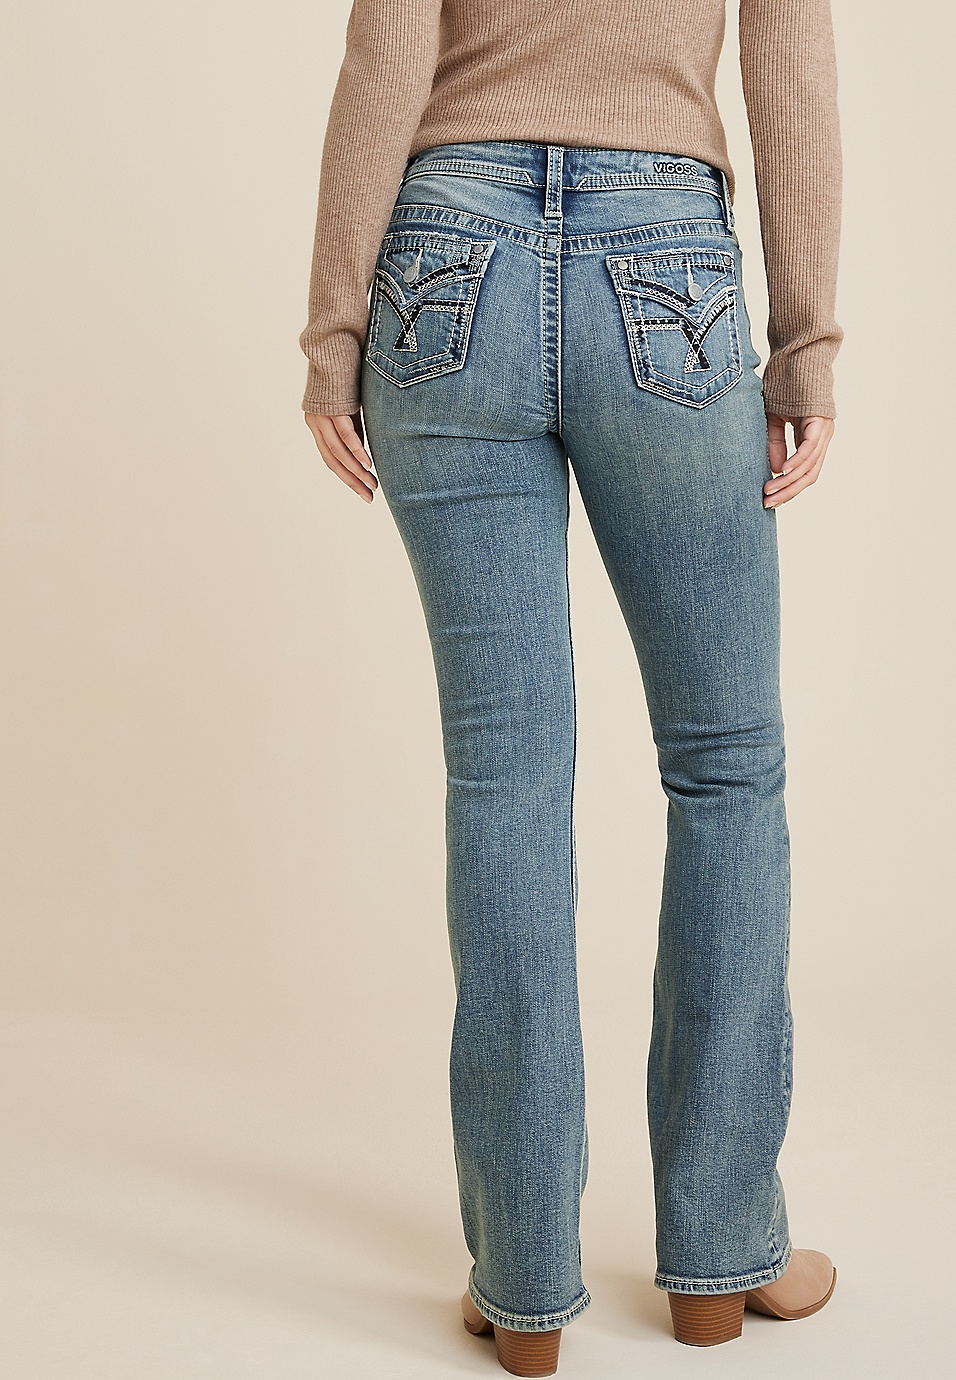 Women's Stretch Faux Pocket Jeans